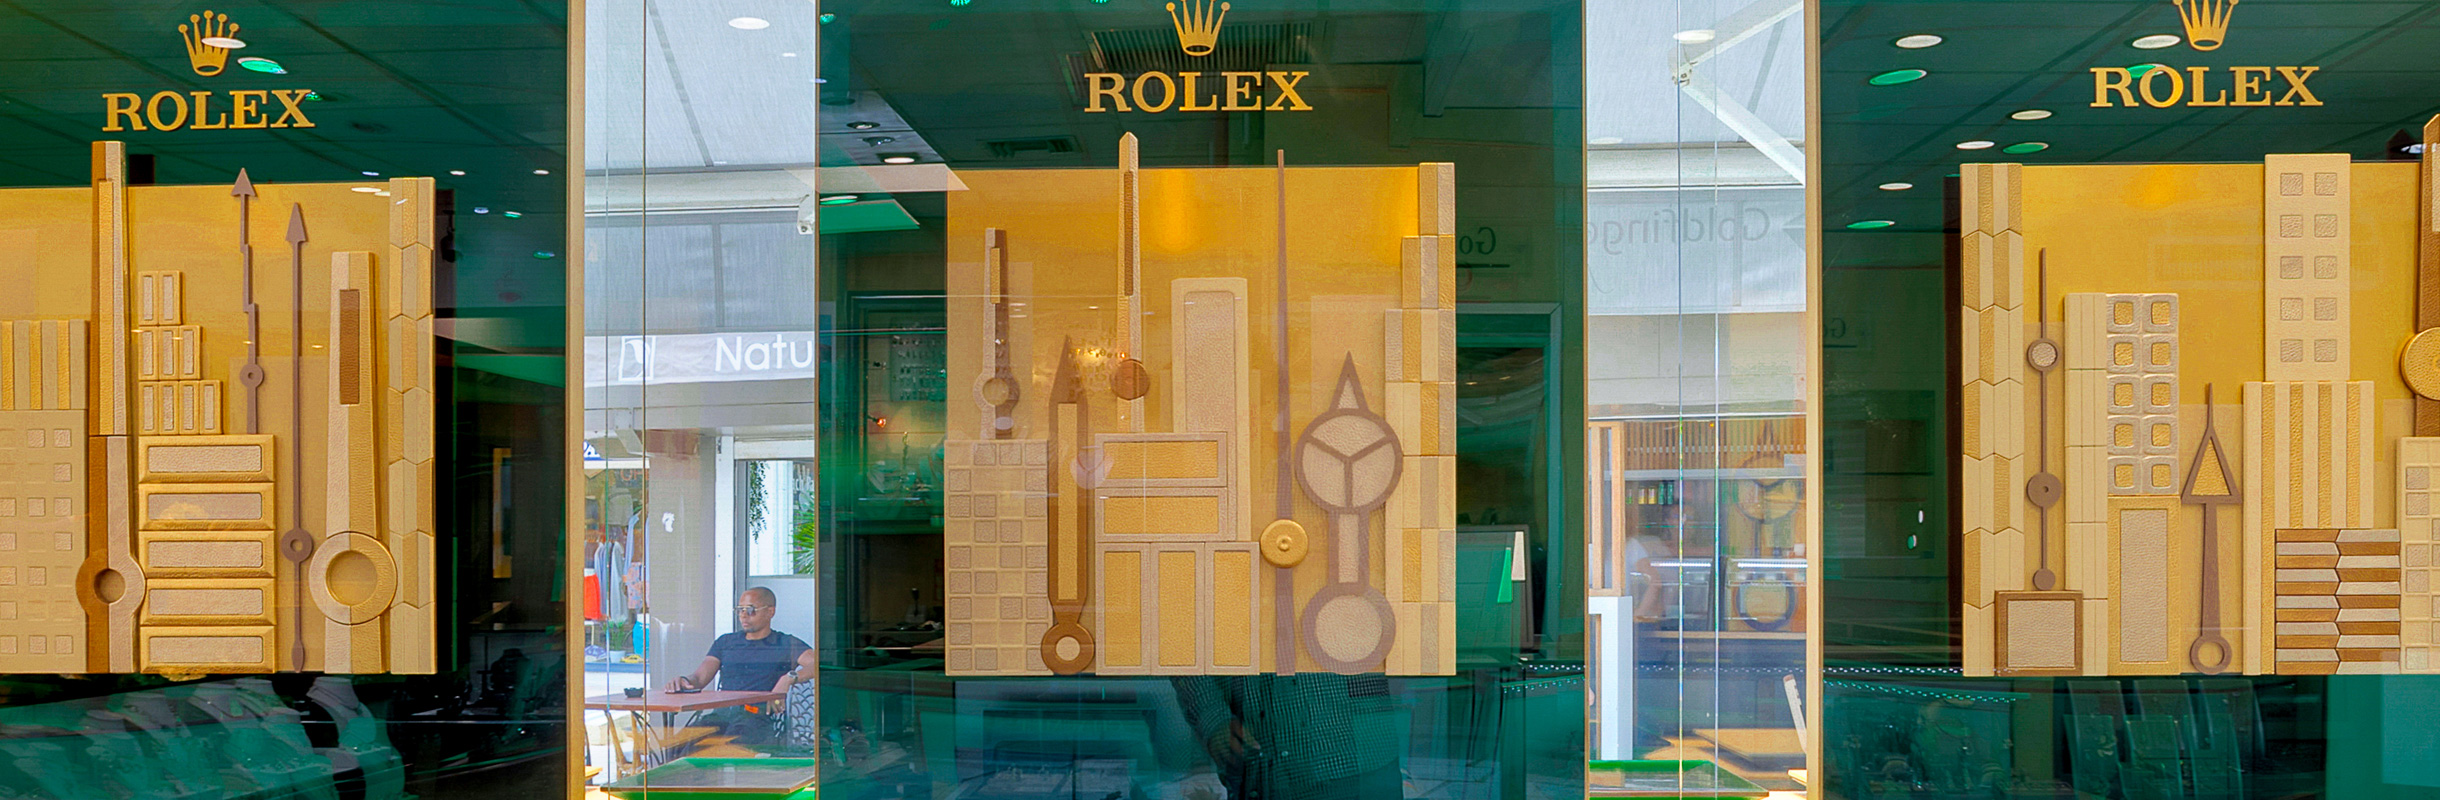 Rolex showroom at Goldfinger Saint-Martin